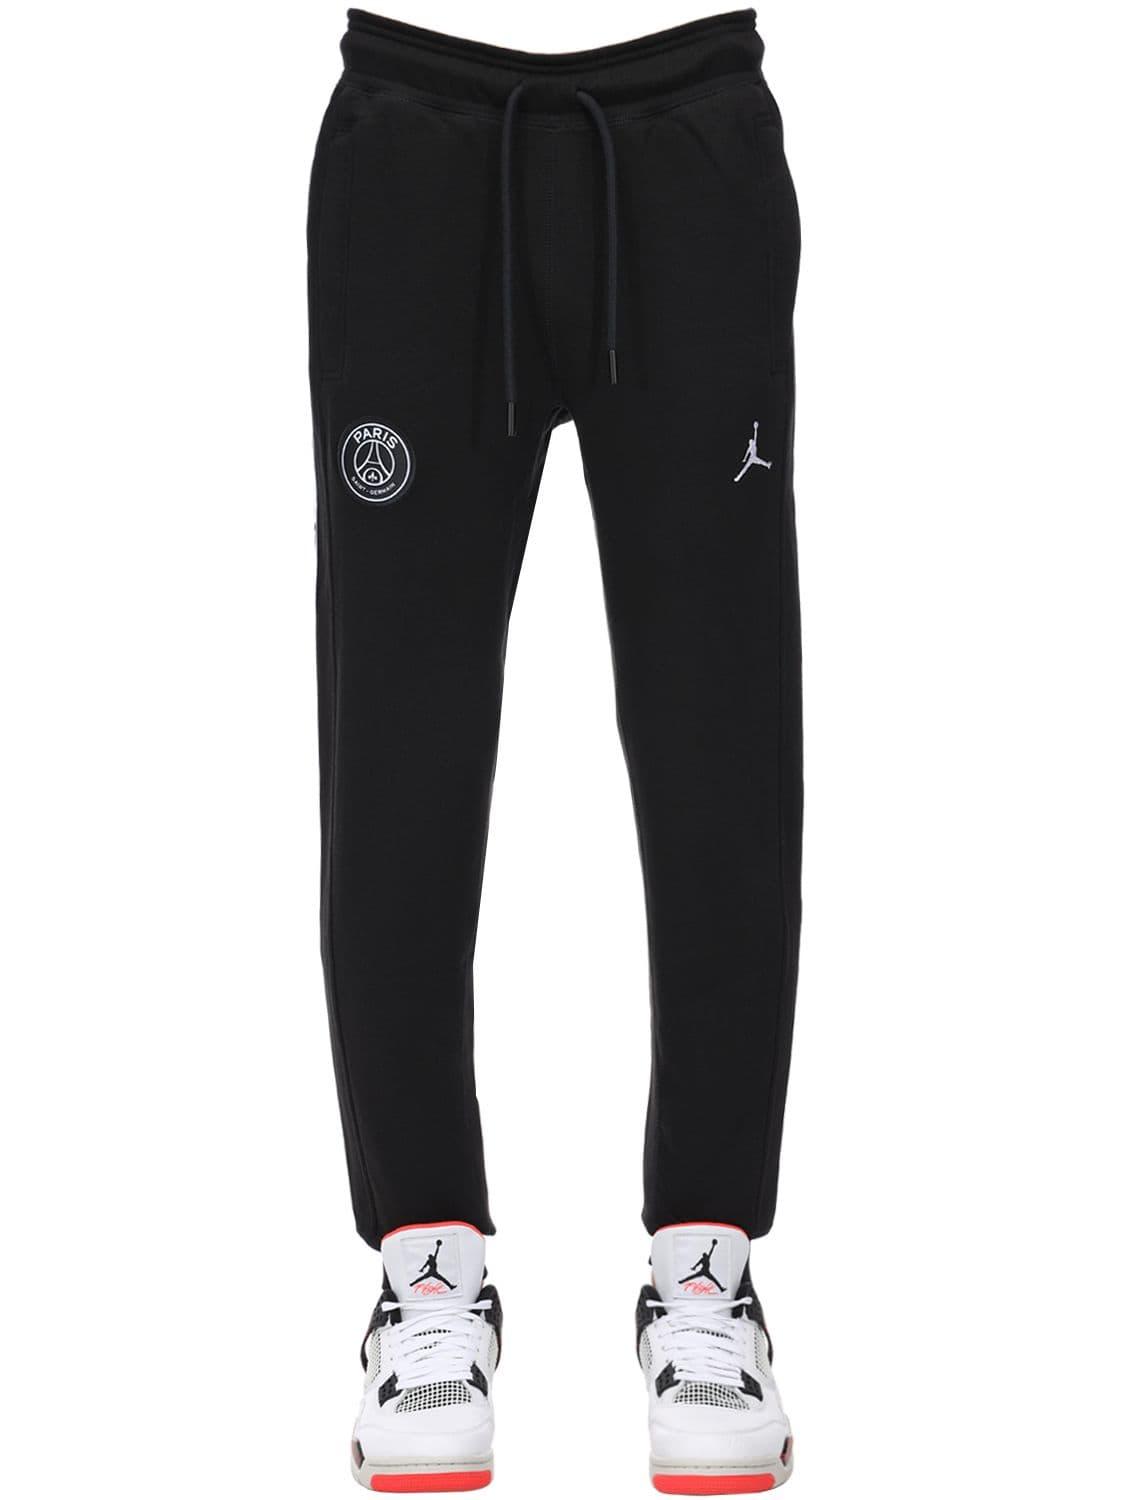 Nike Psg Cotton Blend Sweatpants in Black for Men - Lyst